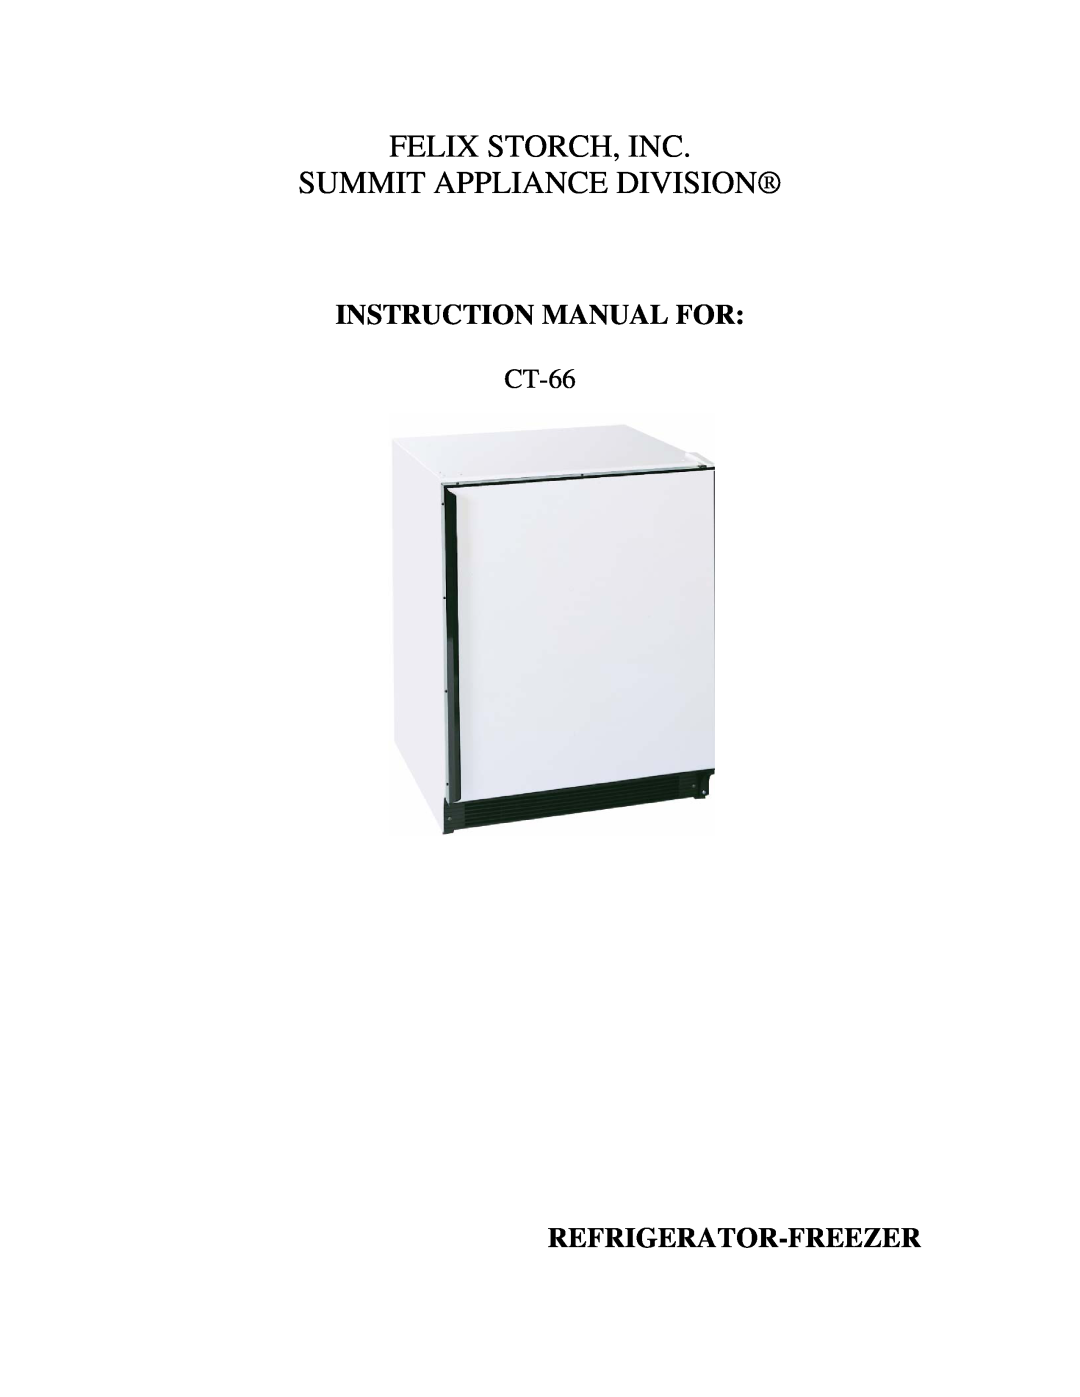 Summit CT-66 instruction manual Refrigerator-Freezer, Felix Storch, Inc Summit Appliance Division 